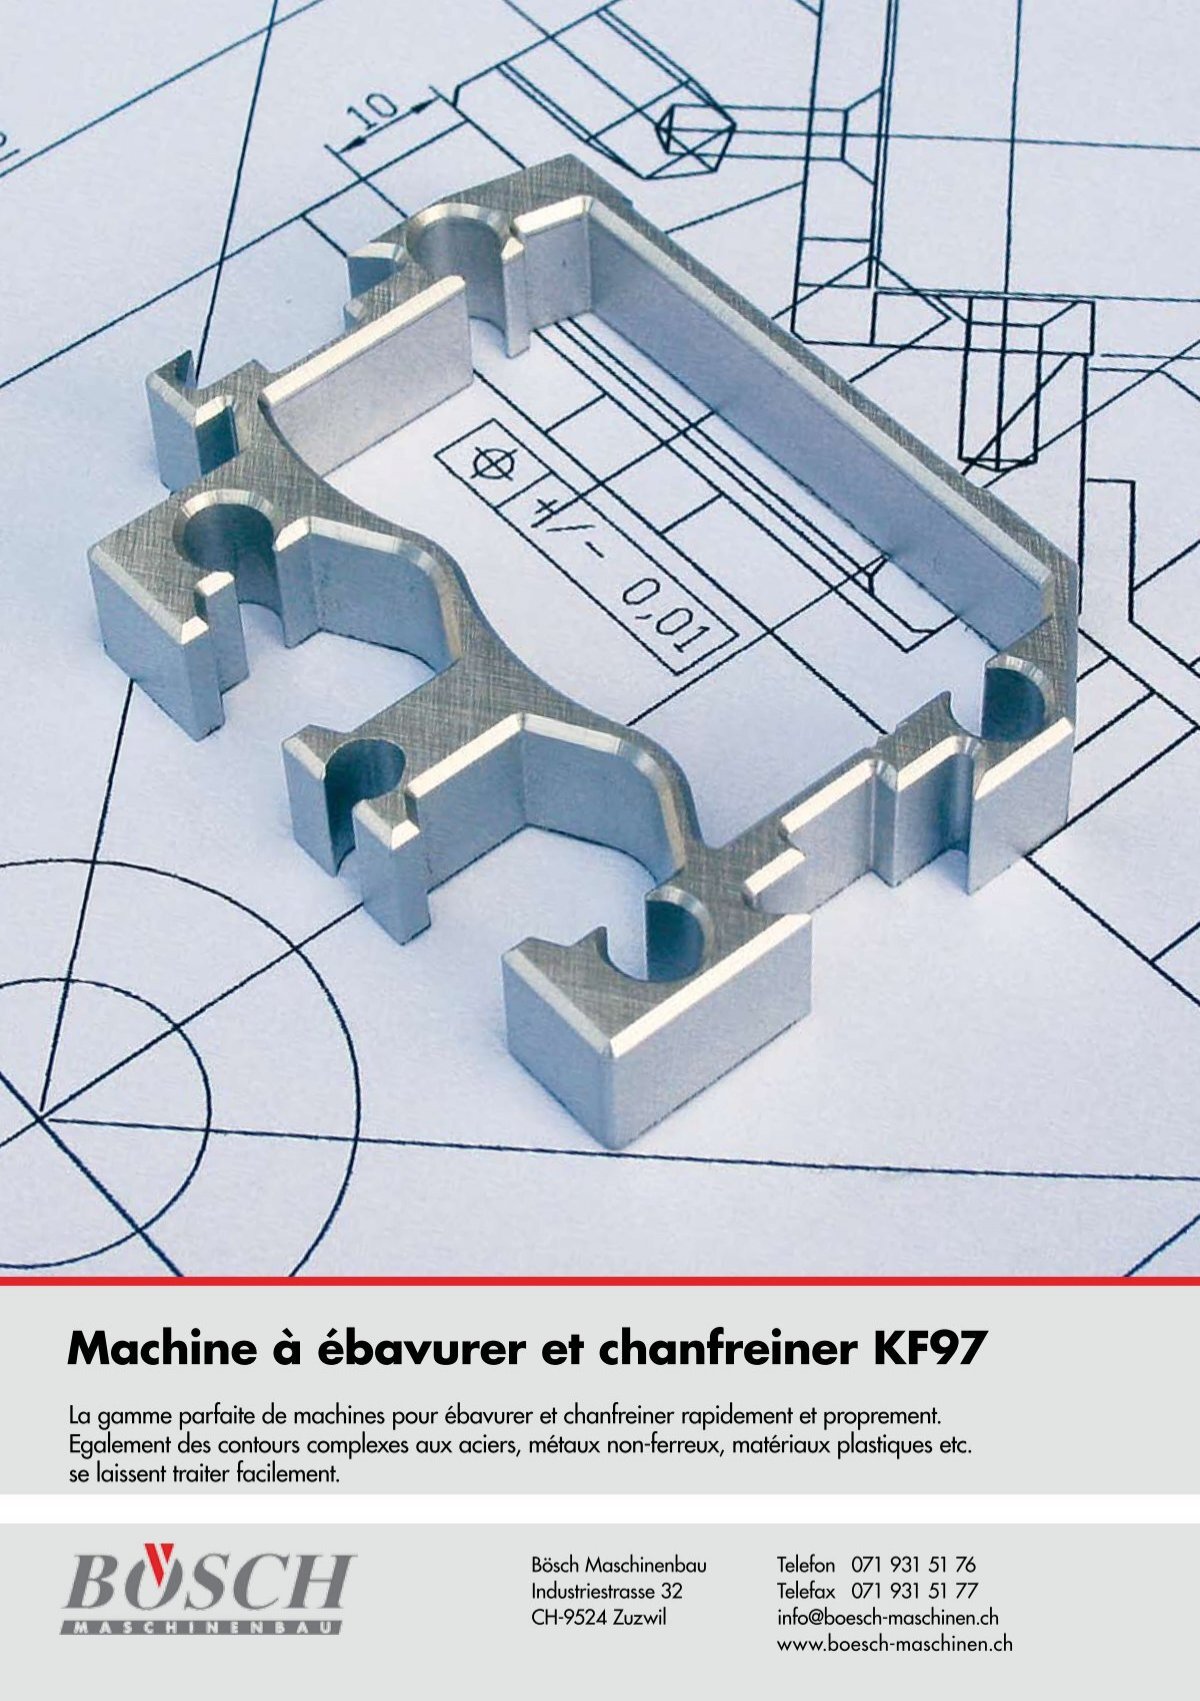 Machine à ébavurer et chanfreiner KF97 - Bösch Maschinenbau